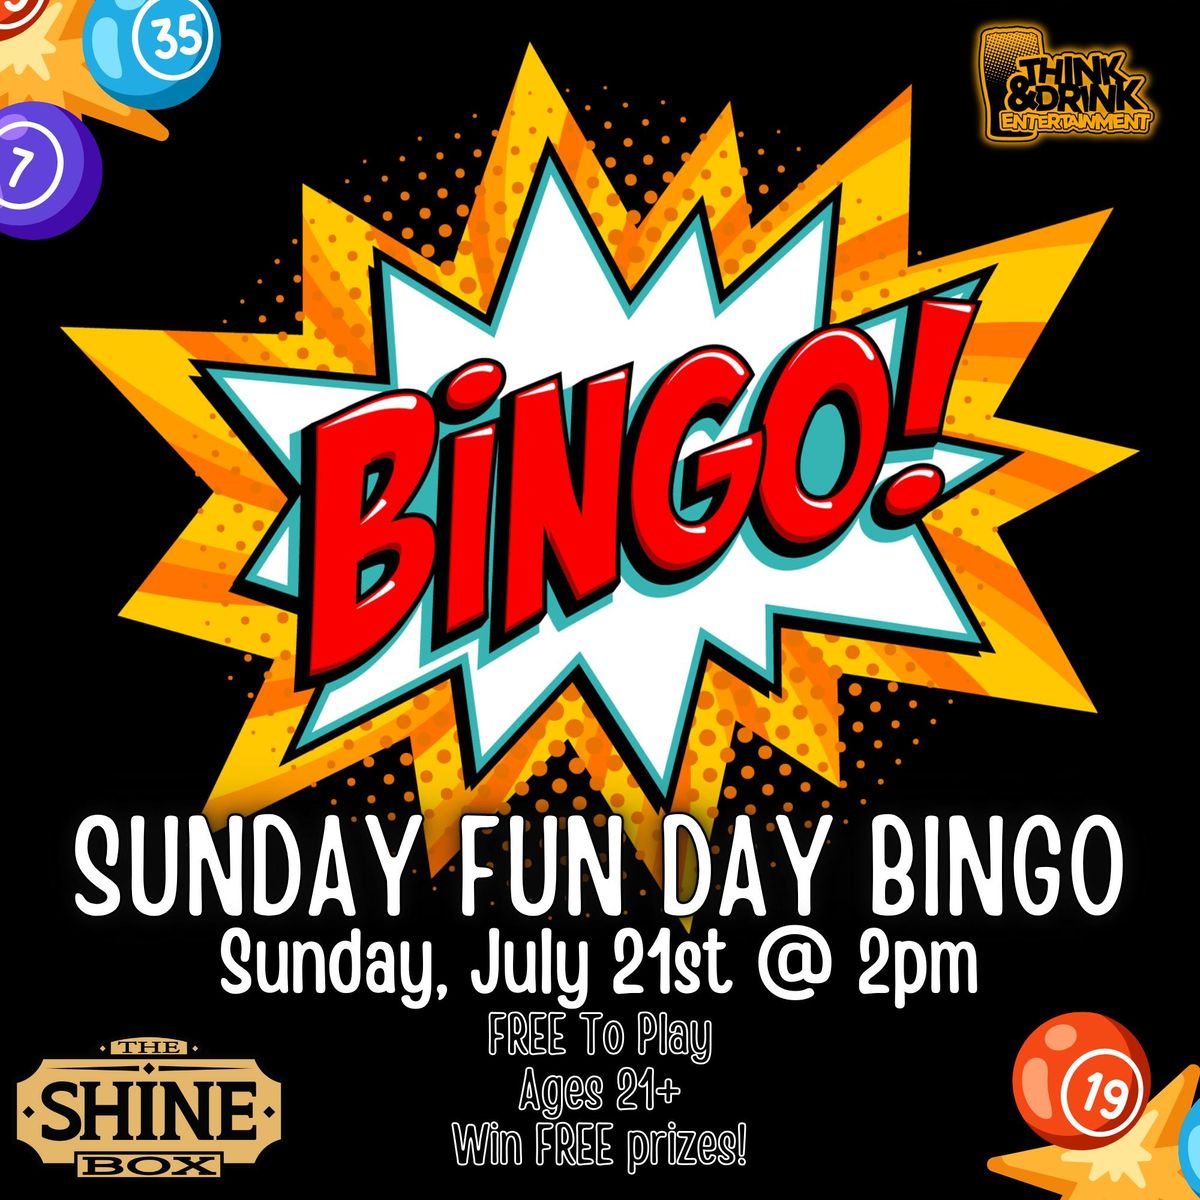 SUNDAY FUN DAY BINGO (Old School Bingo) @ The Shine Box (East Moline, IL) \/ Sunday, July 21st @ 2pm